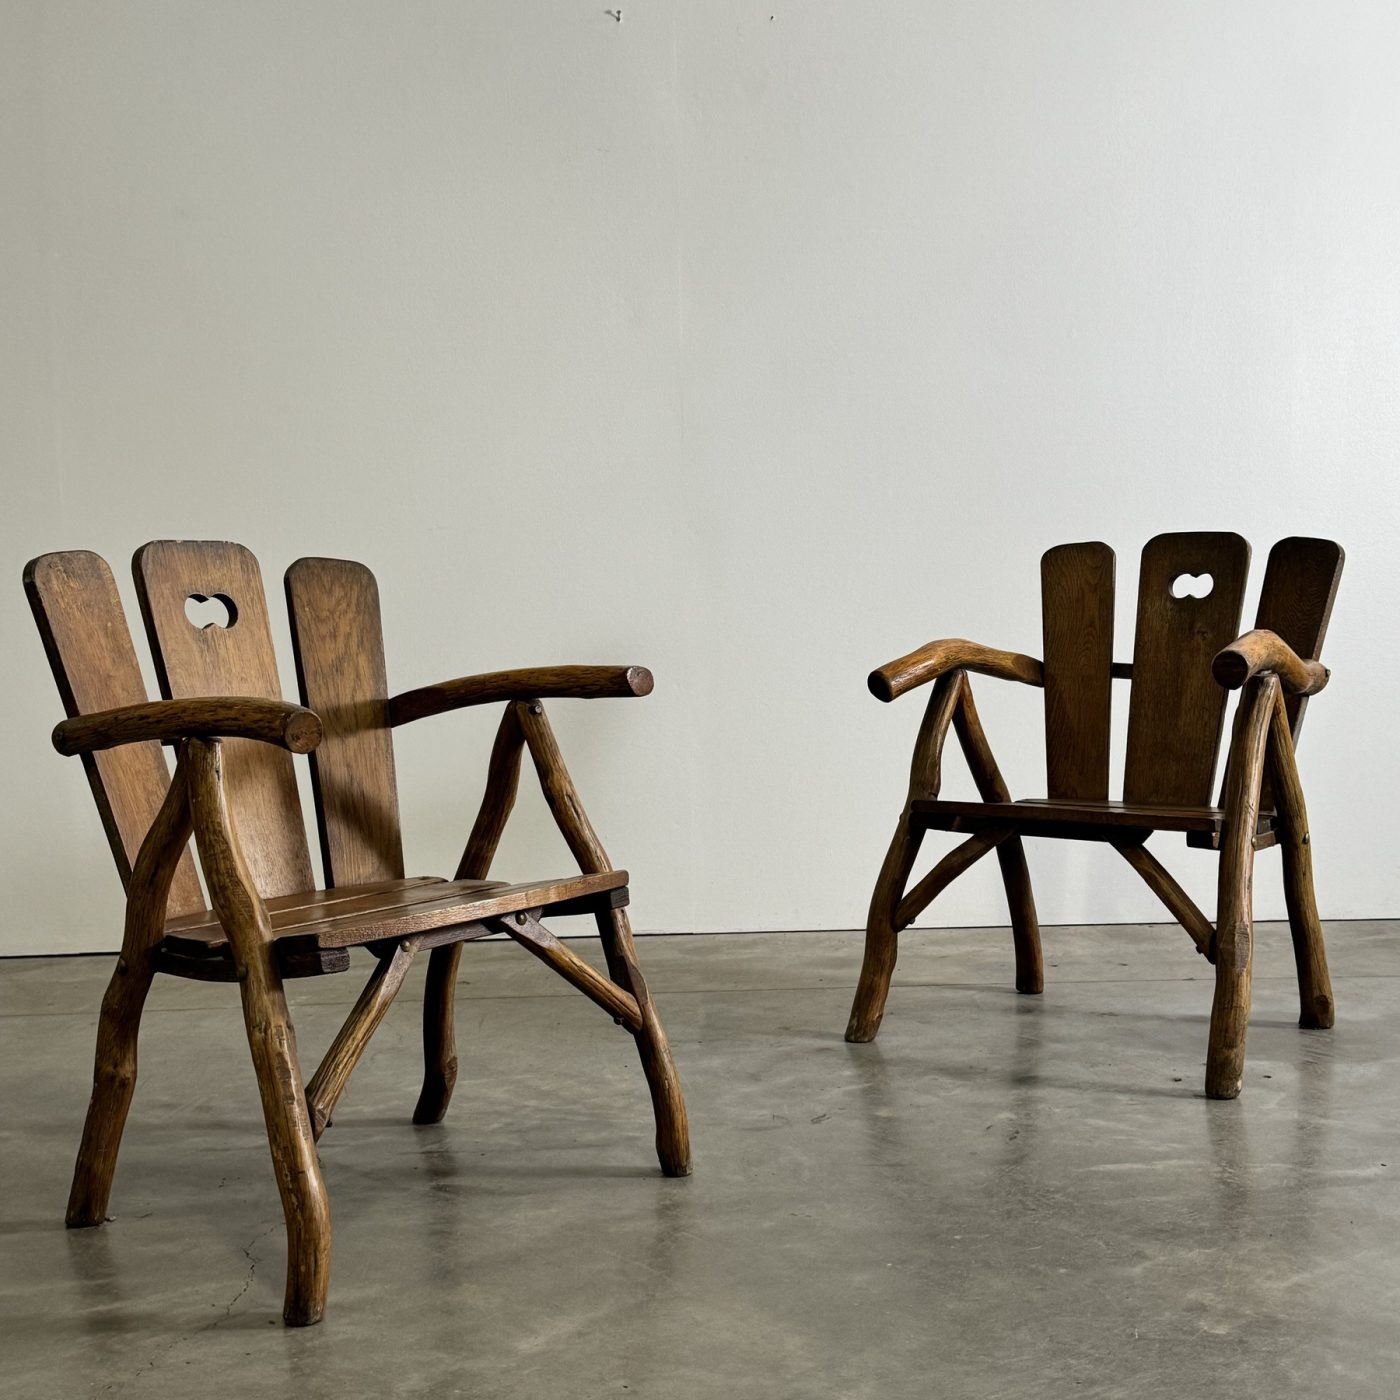 objet-vagabond-wooden-armchairs0003